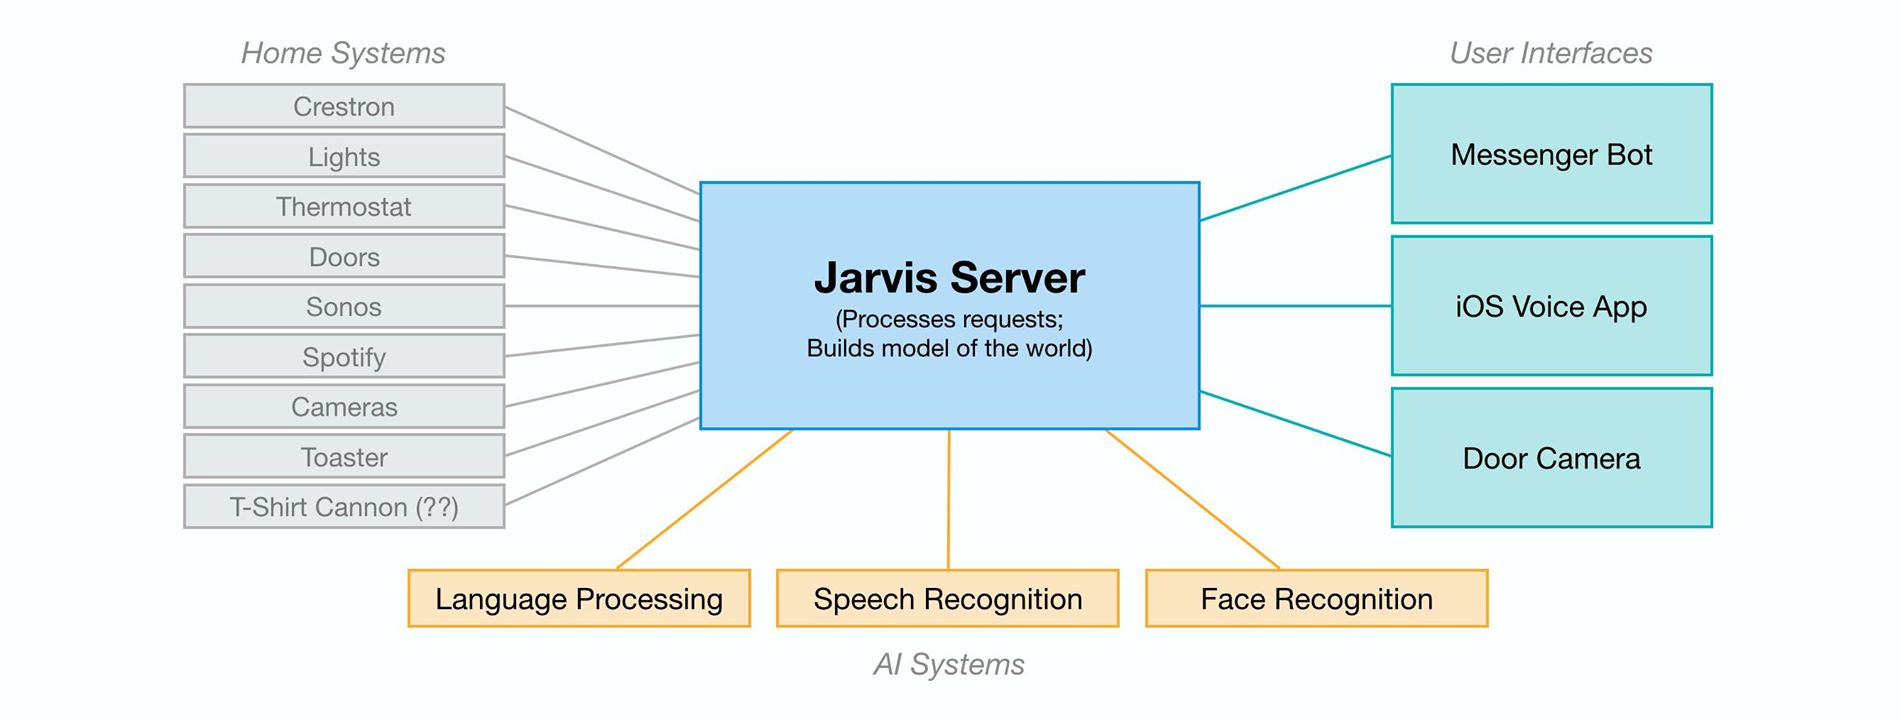 JArvis Server